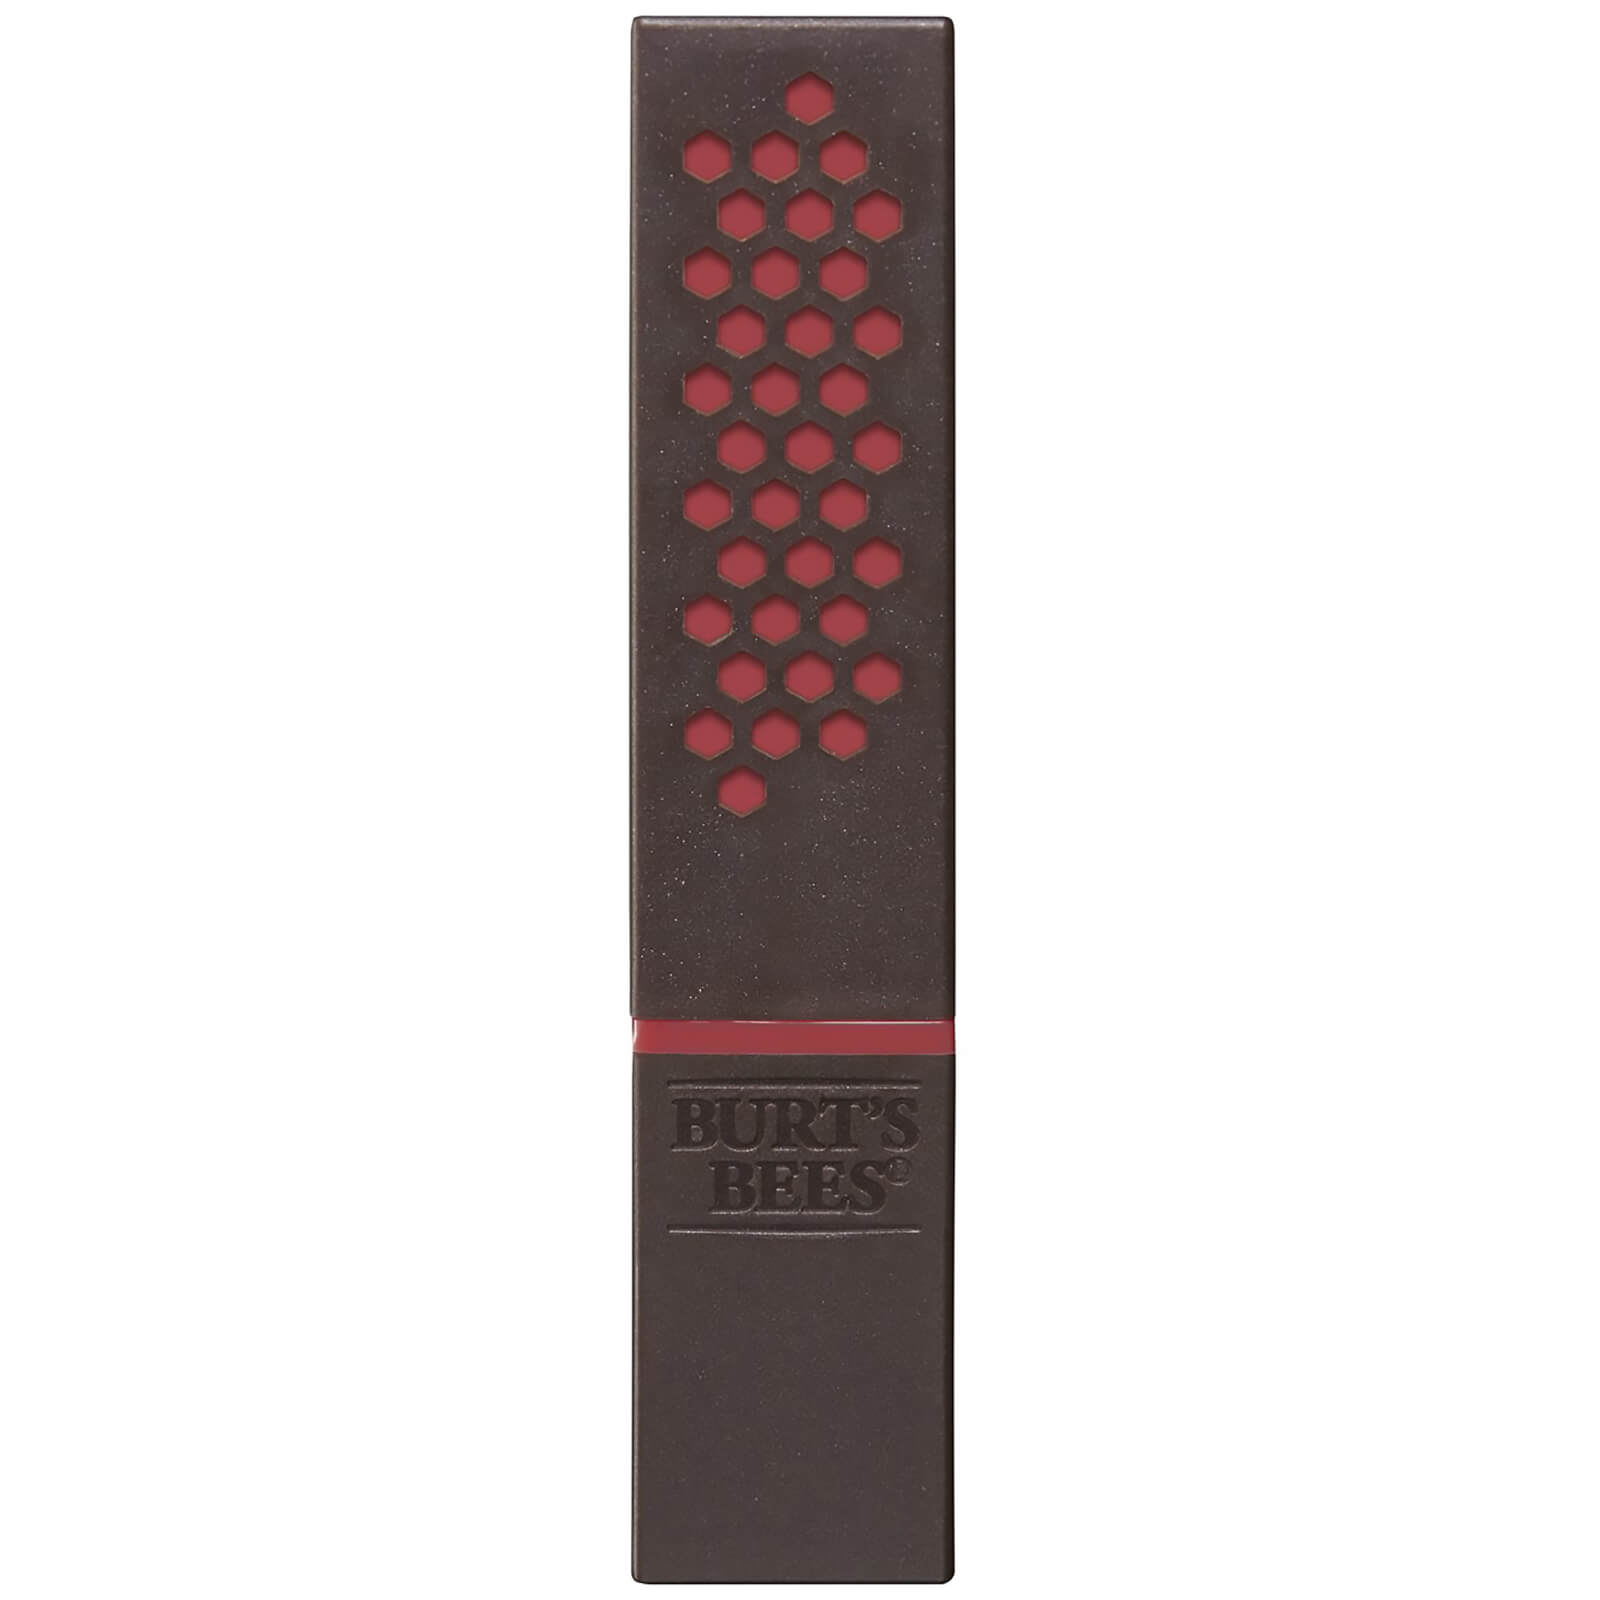 Burt's Bees 100% Natural Glossy Lipstick (flere nyanser) - Blush Ripple